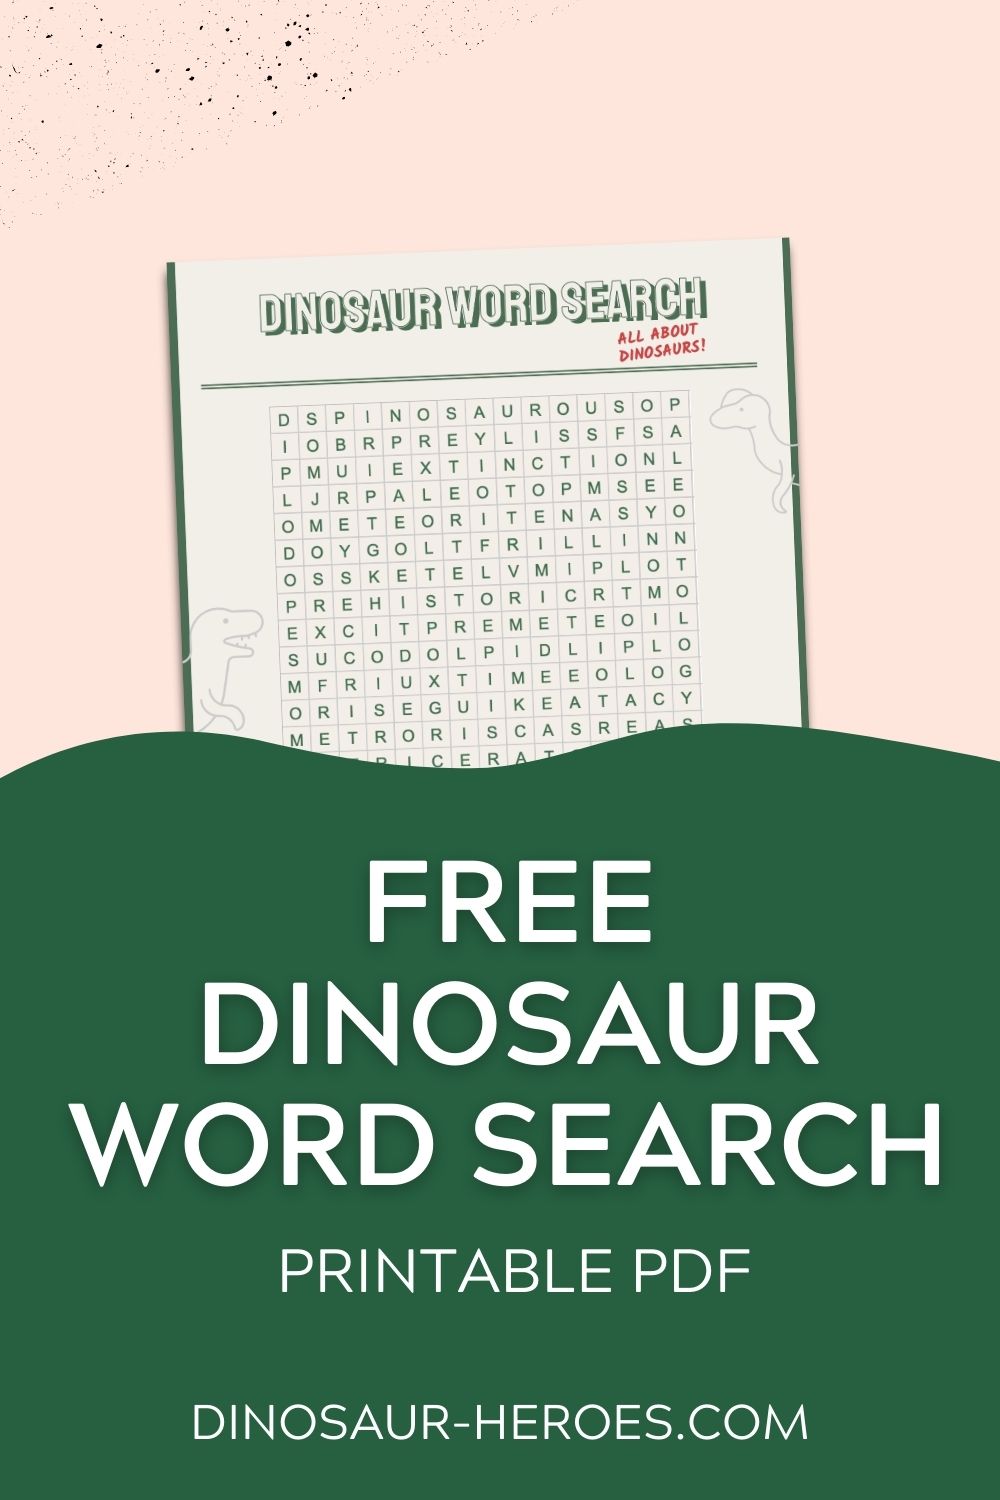 Dinosaur-Heroes-Dinosaur-Word-Search